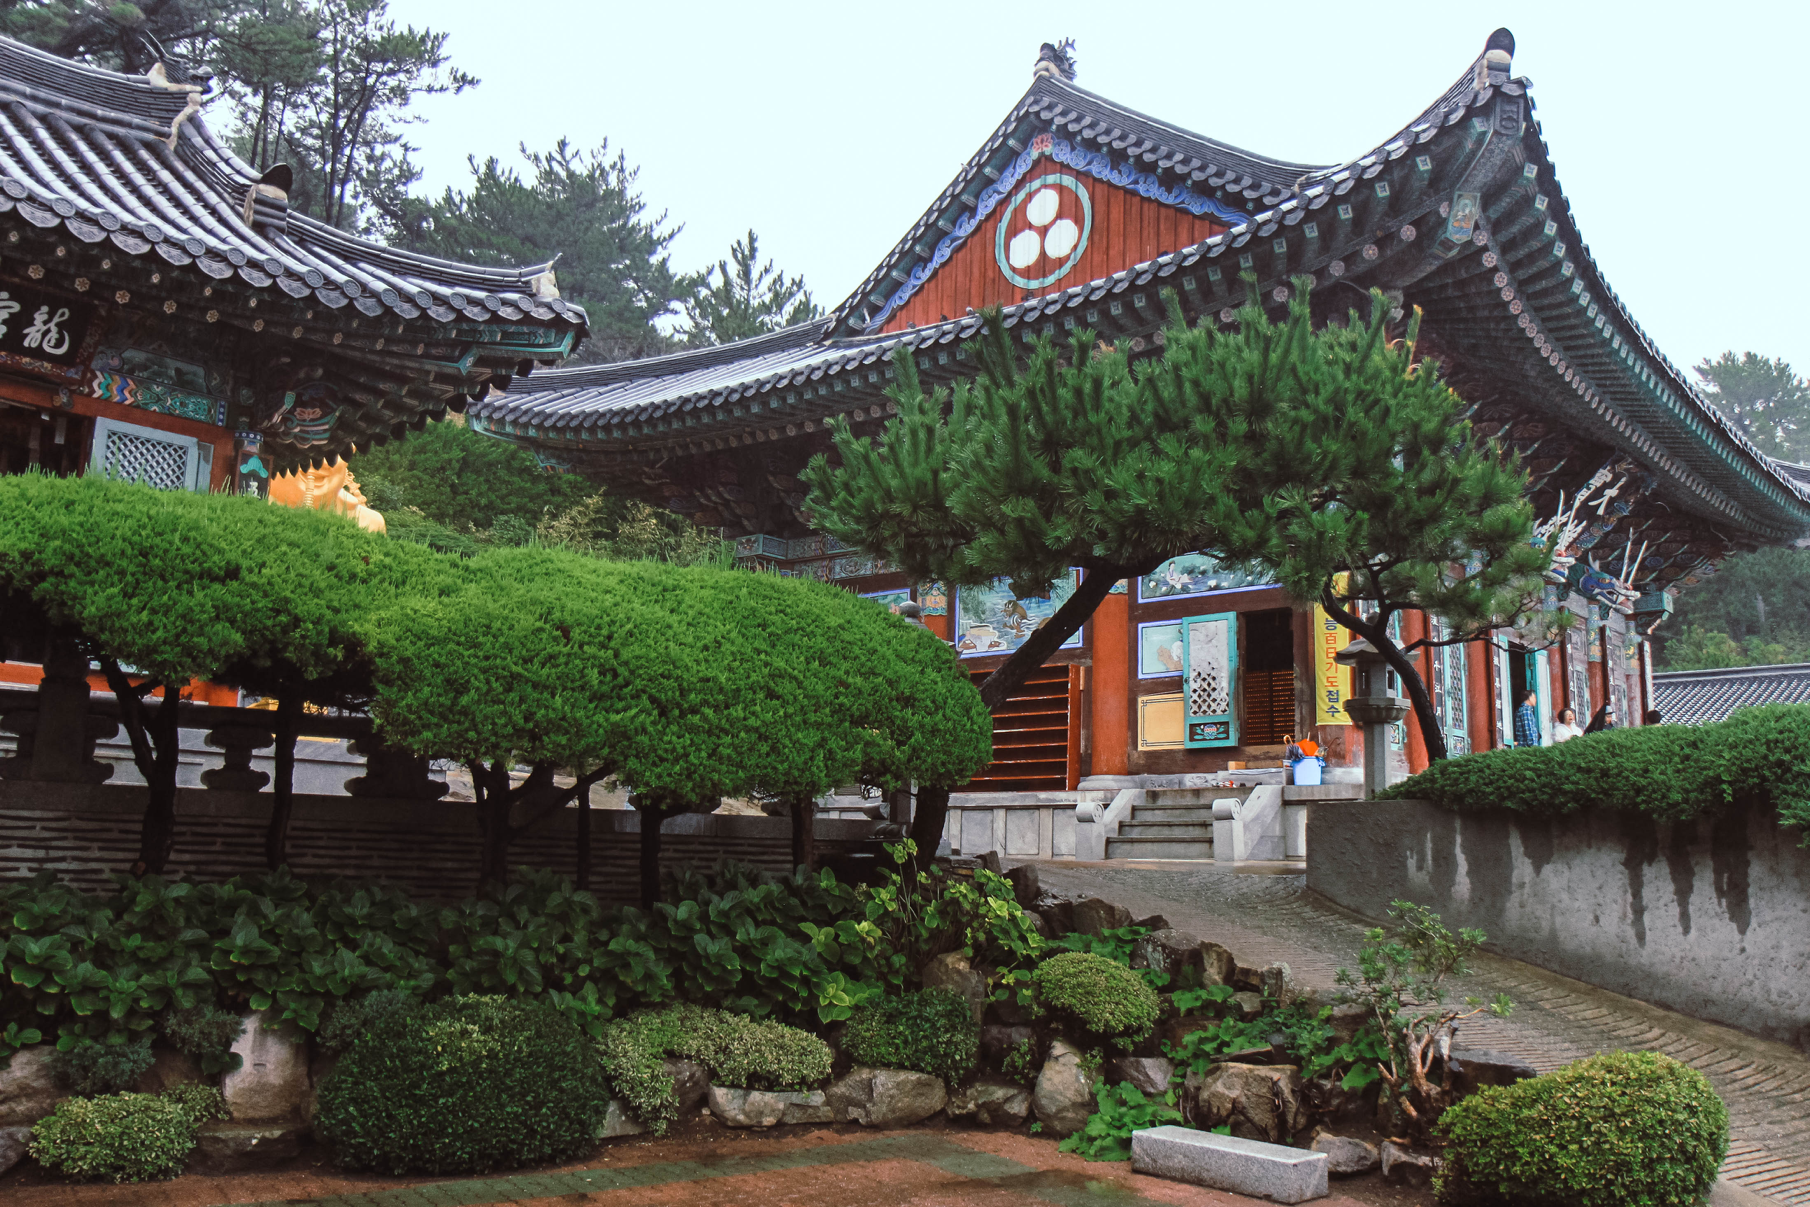 Haedong Yonggungsa Temple in Busan